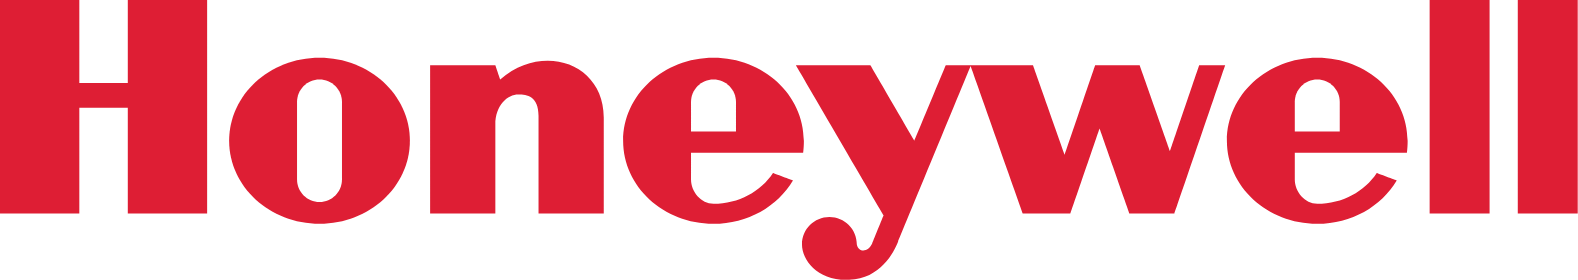 Honeywell logo large (transparent PNG)